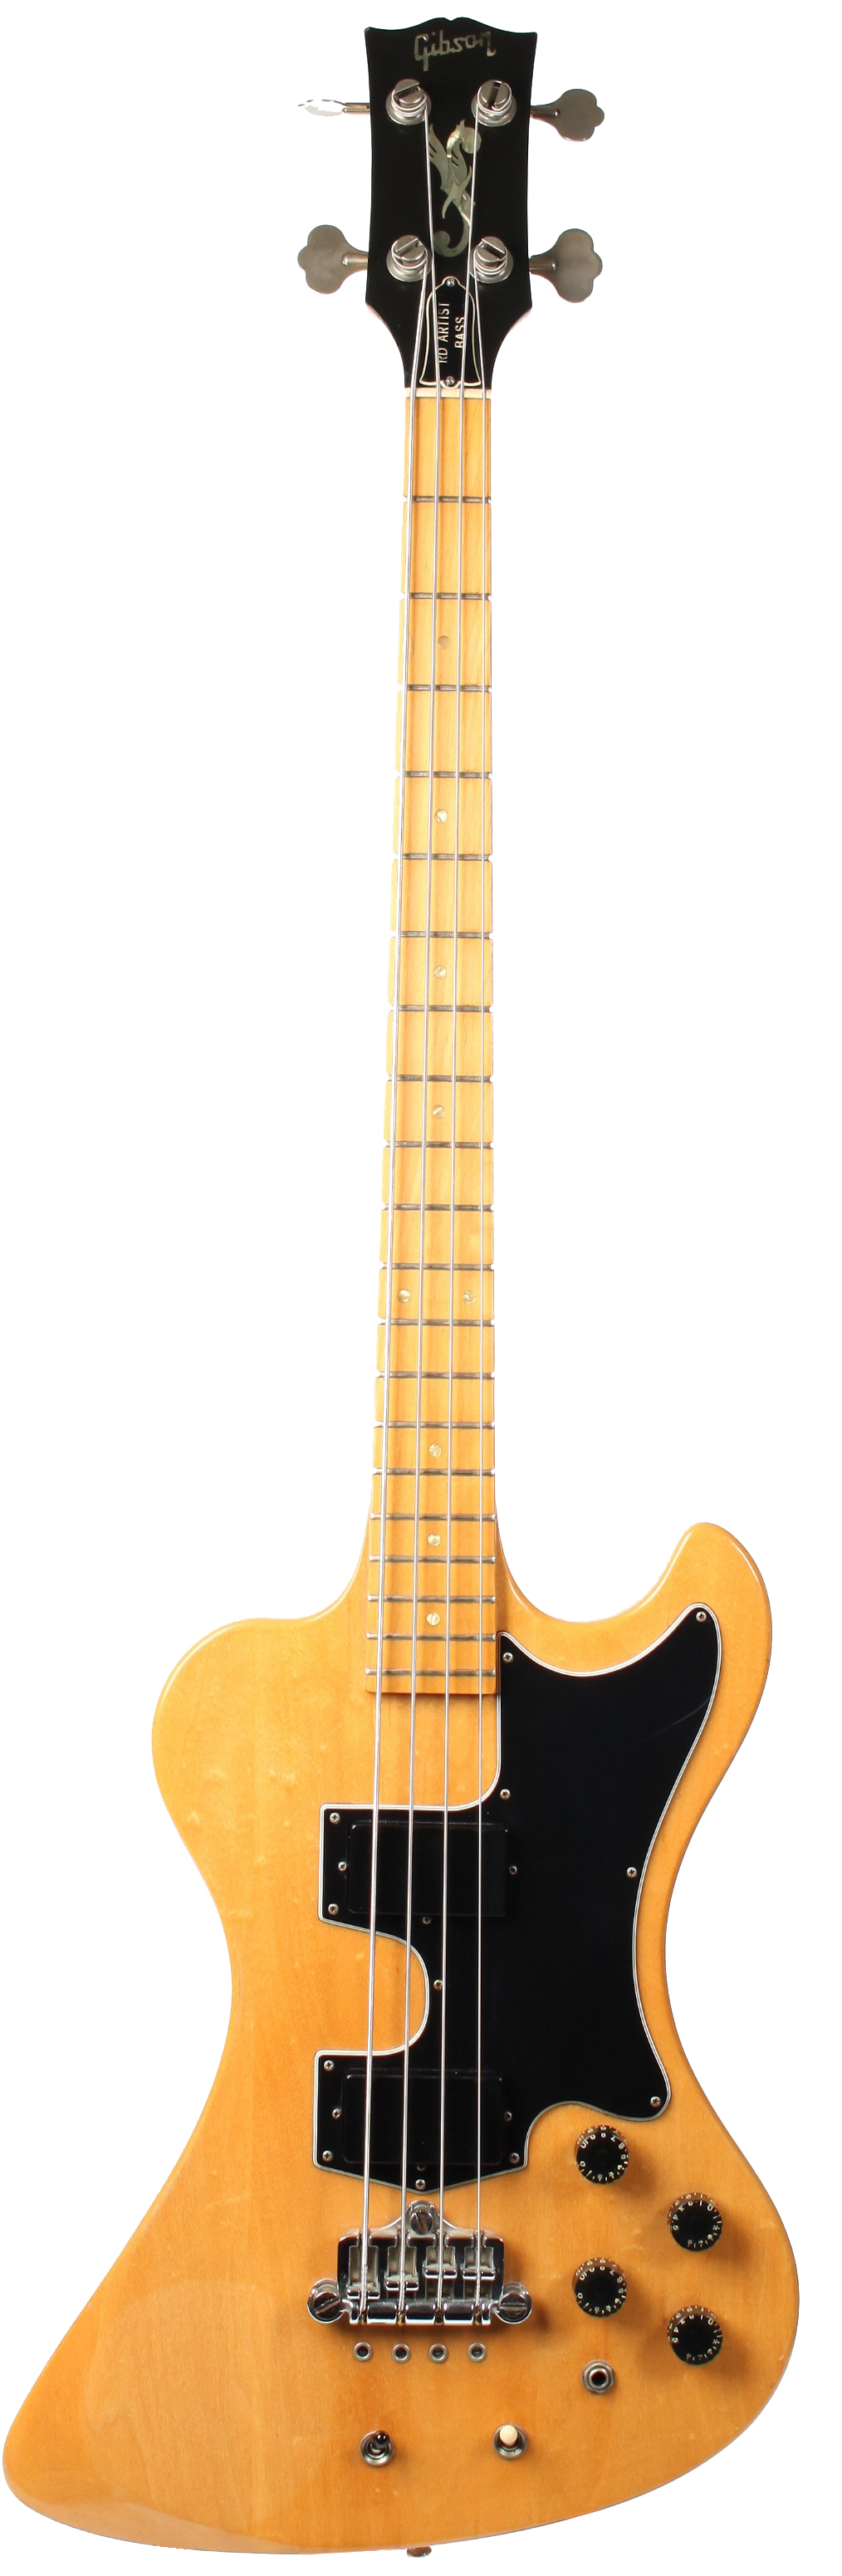 Gibson bass cars245